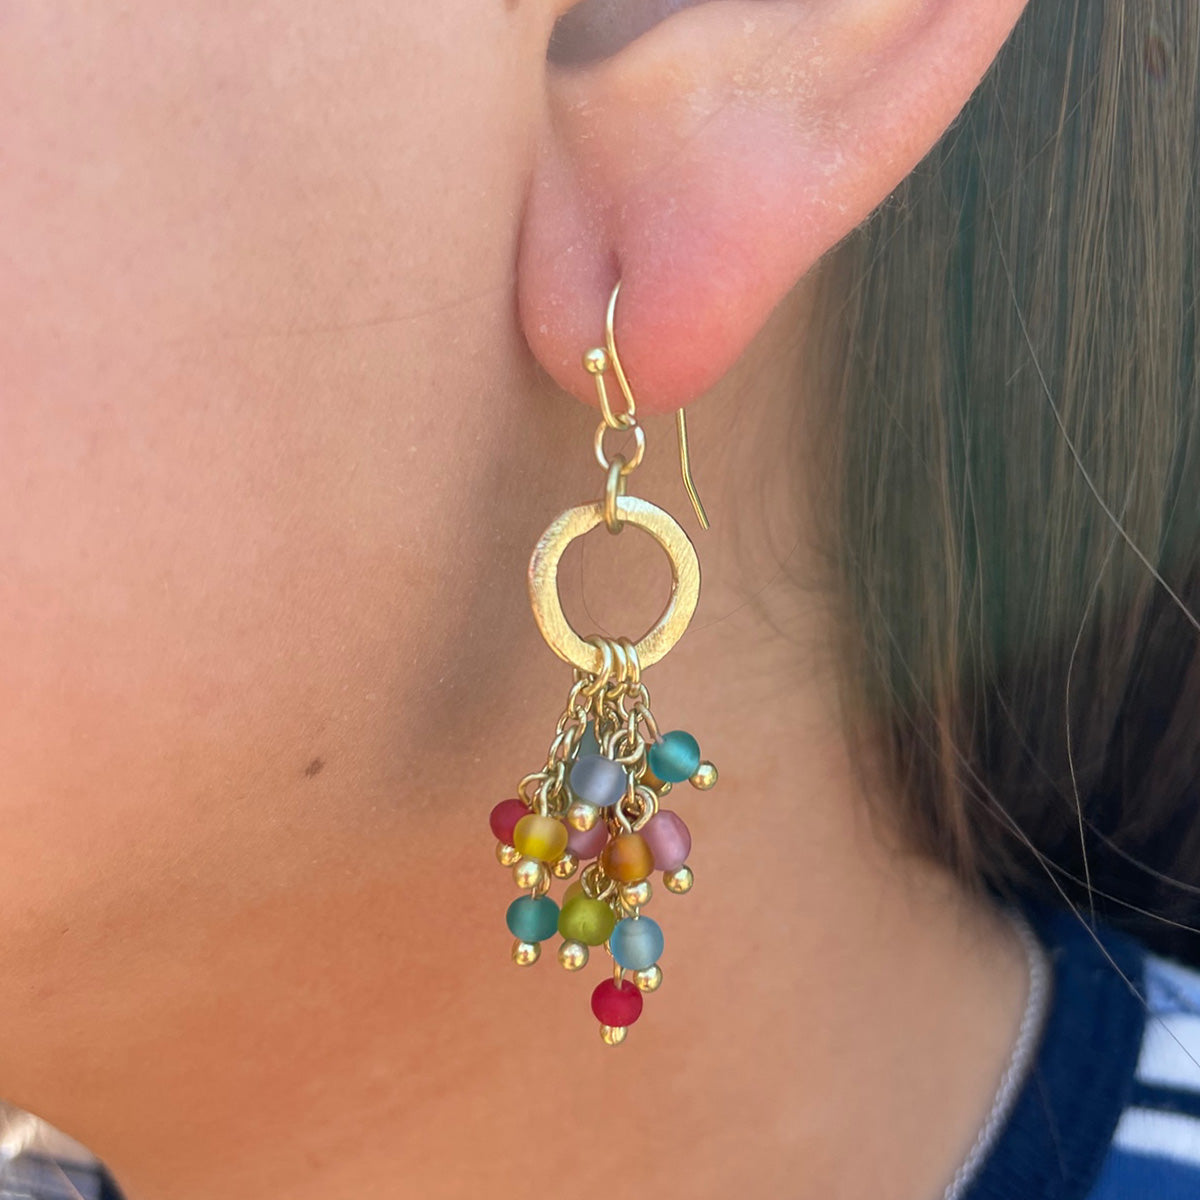 Angelco Accessories Treasure show hoop earrings  - close up worn by model